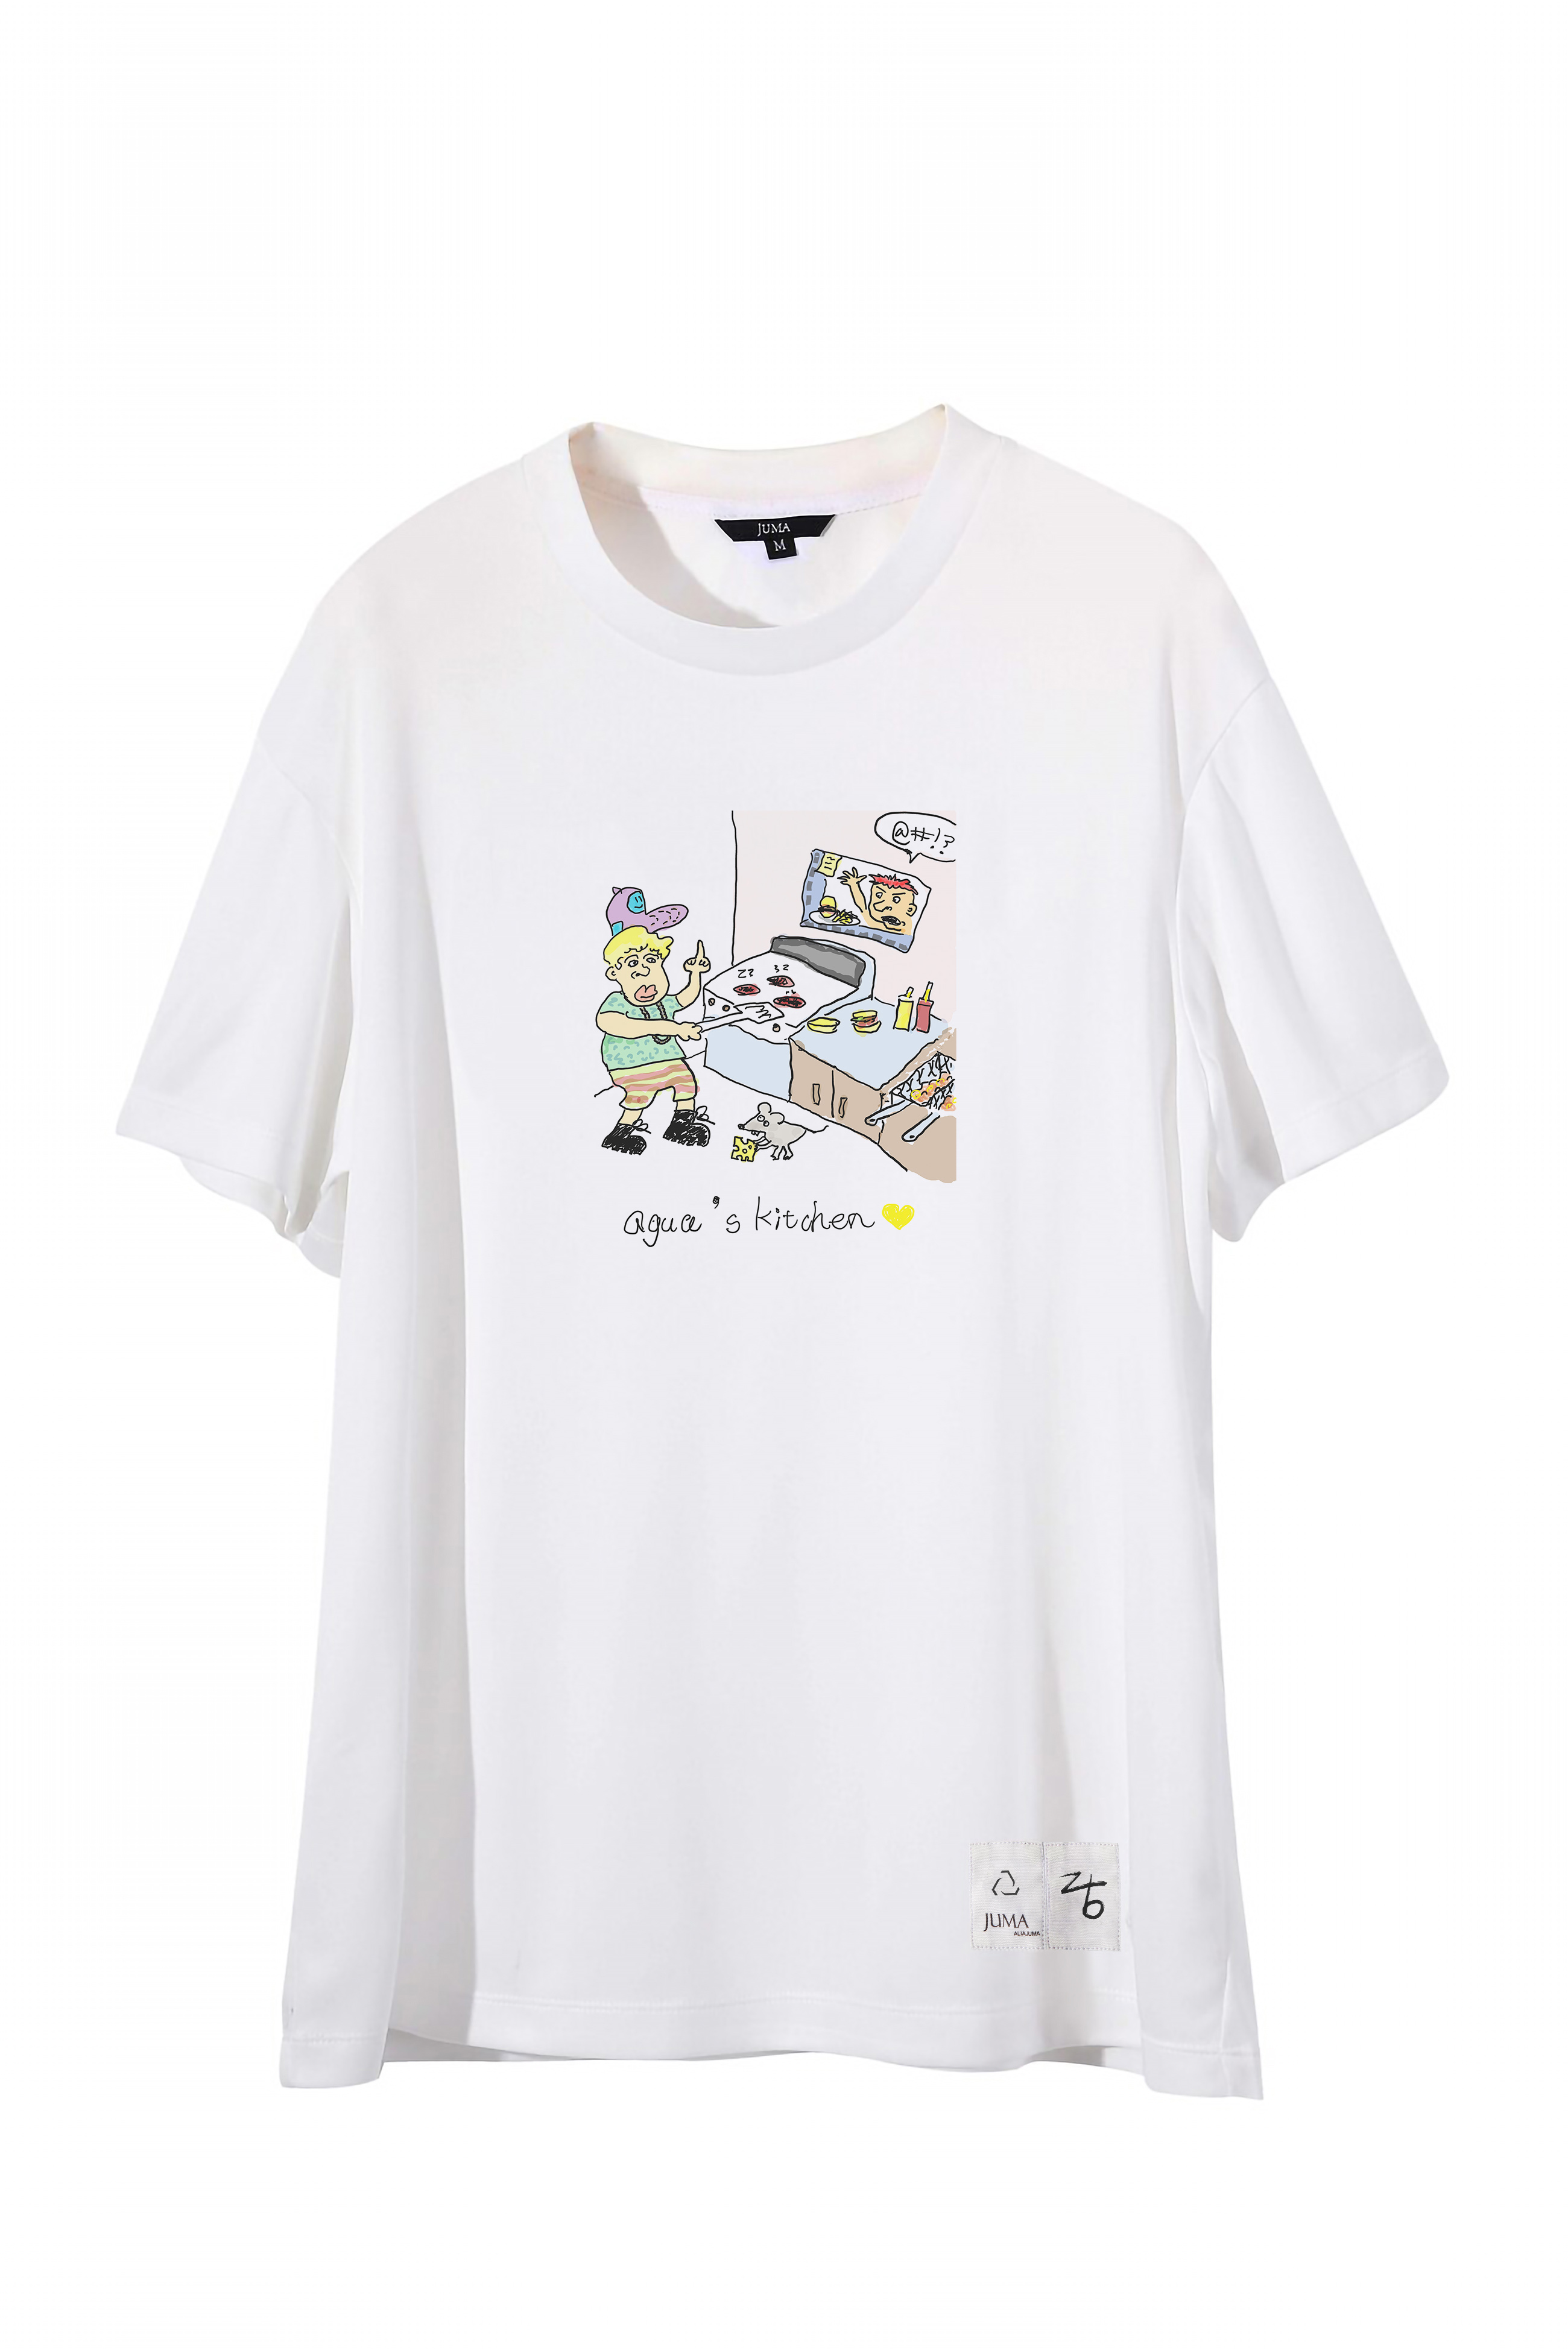 Z+B Aqua厨房印花T恤 - 4个回收水瓶 - 白色｜Z+B Aqua kitchen Print T-Shirt - 4 Recycled Water Bottles - White